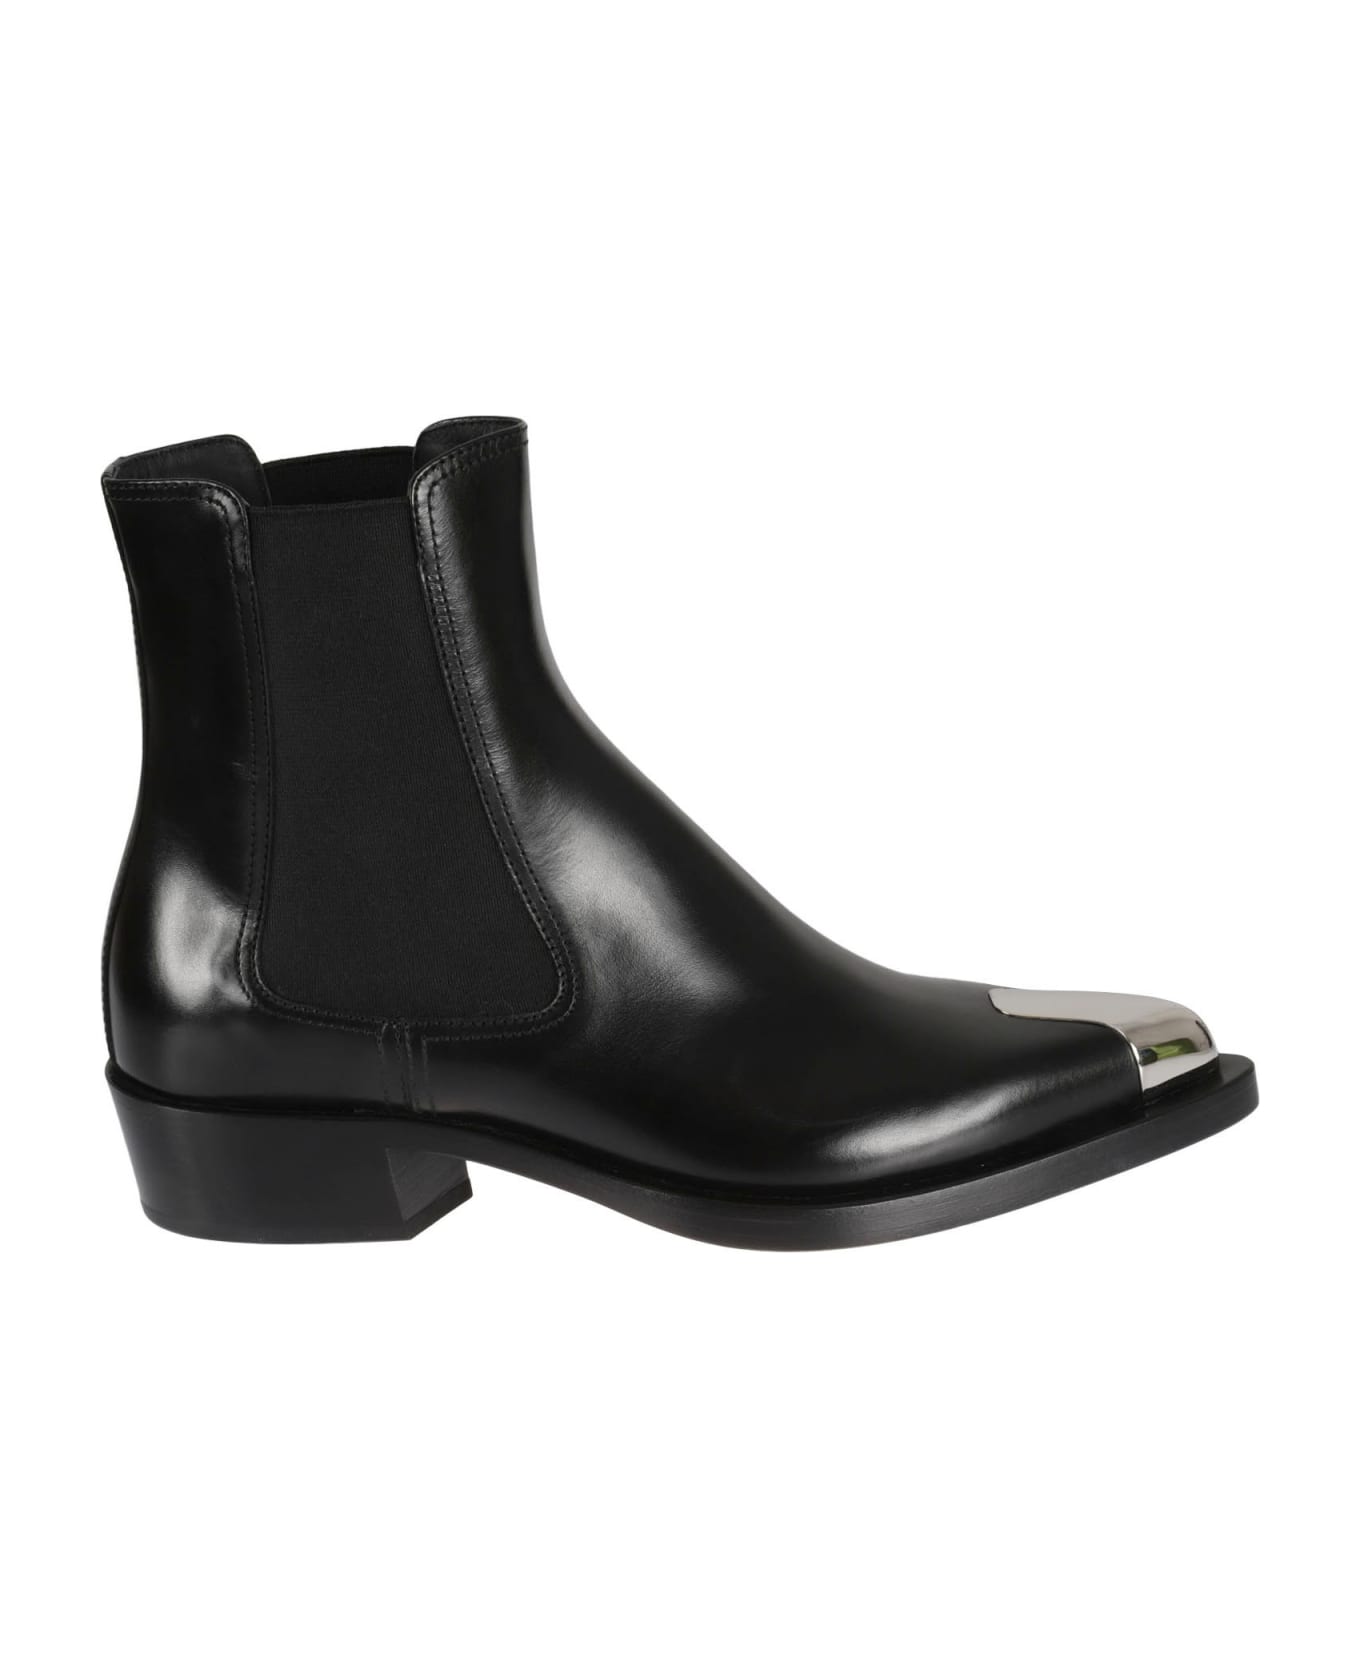 Alexander McQueen Metallic Toe Boots - Black/Silver